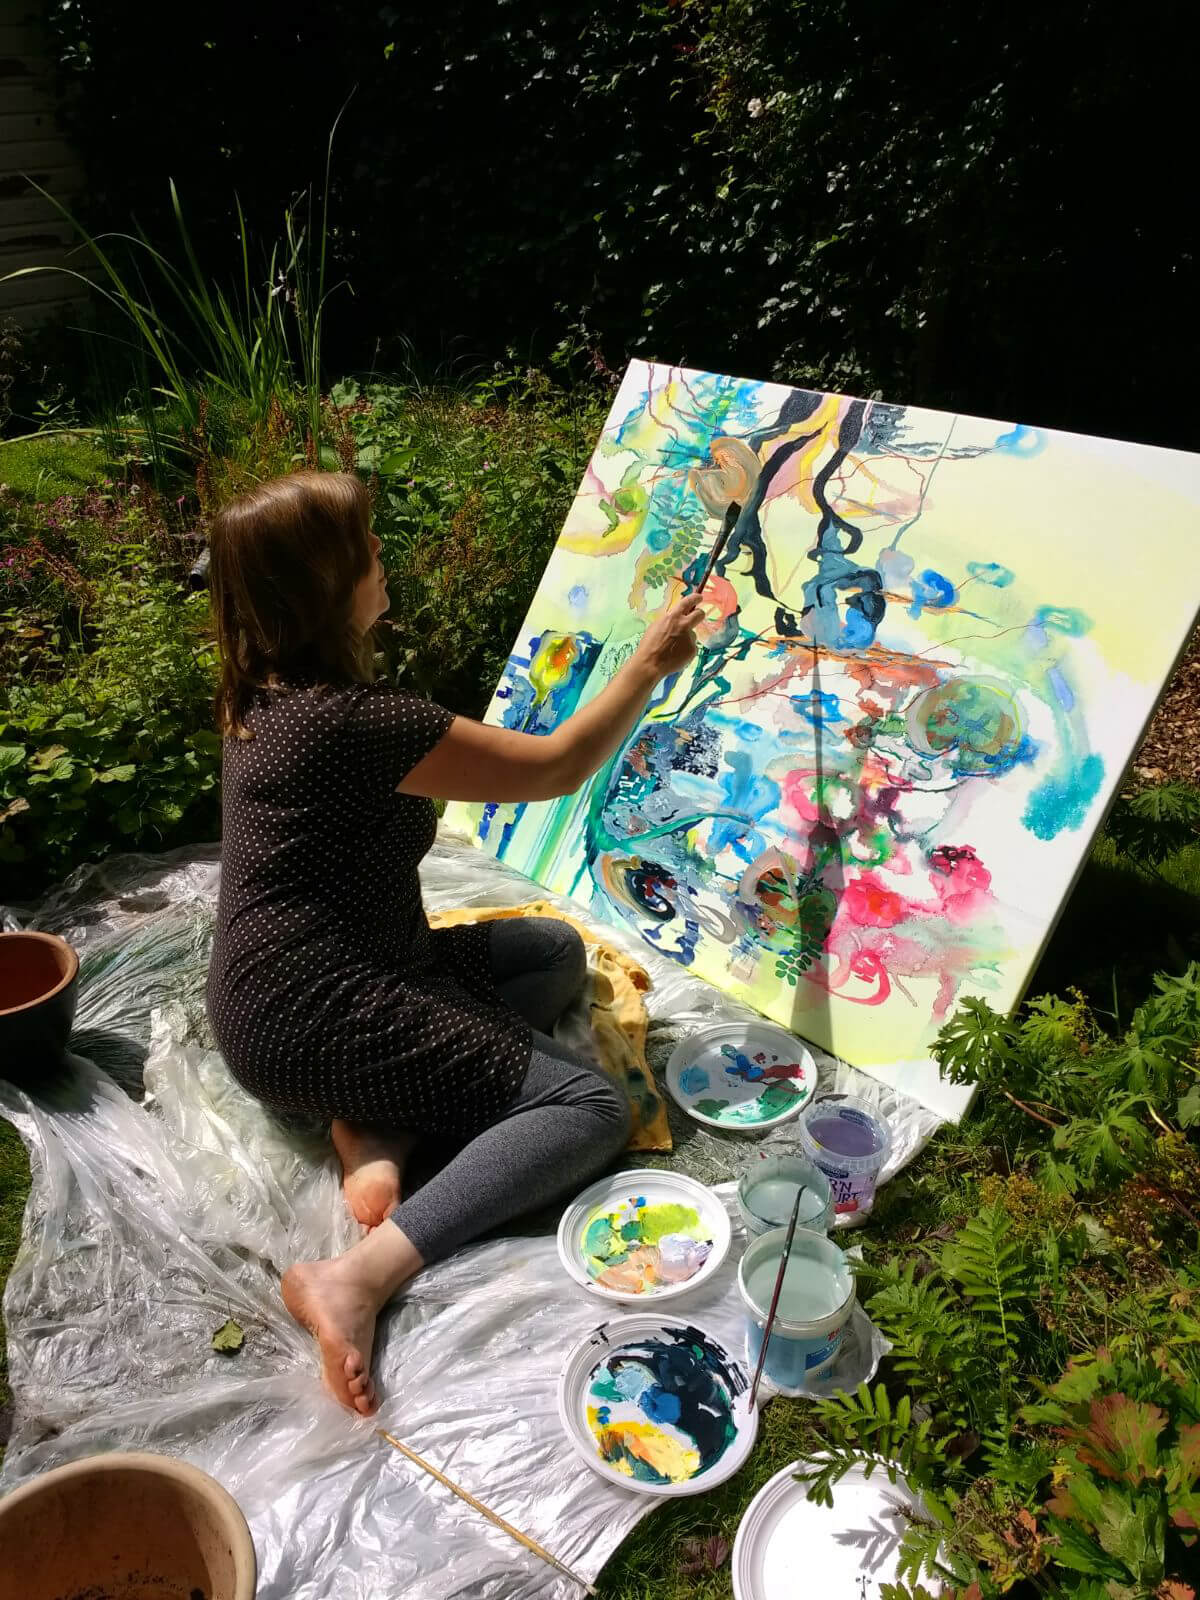 Geazwart vijvers pond enpleinair pantarhei schilderkunst doek painting pleinair groningen tuin garden